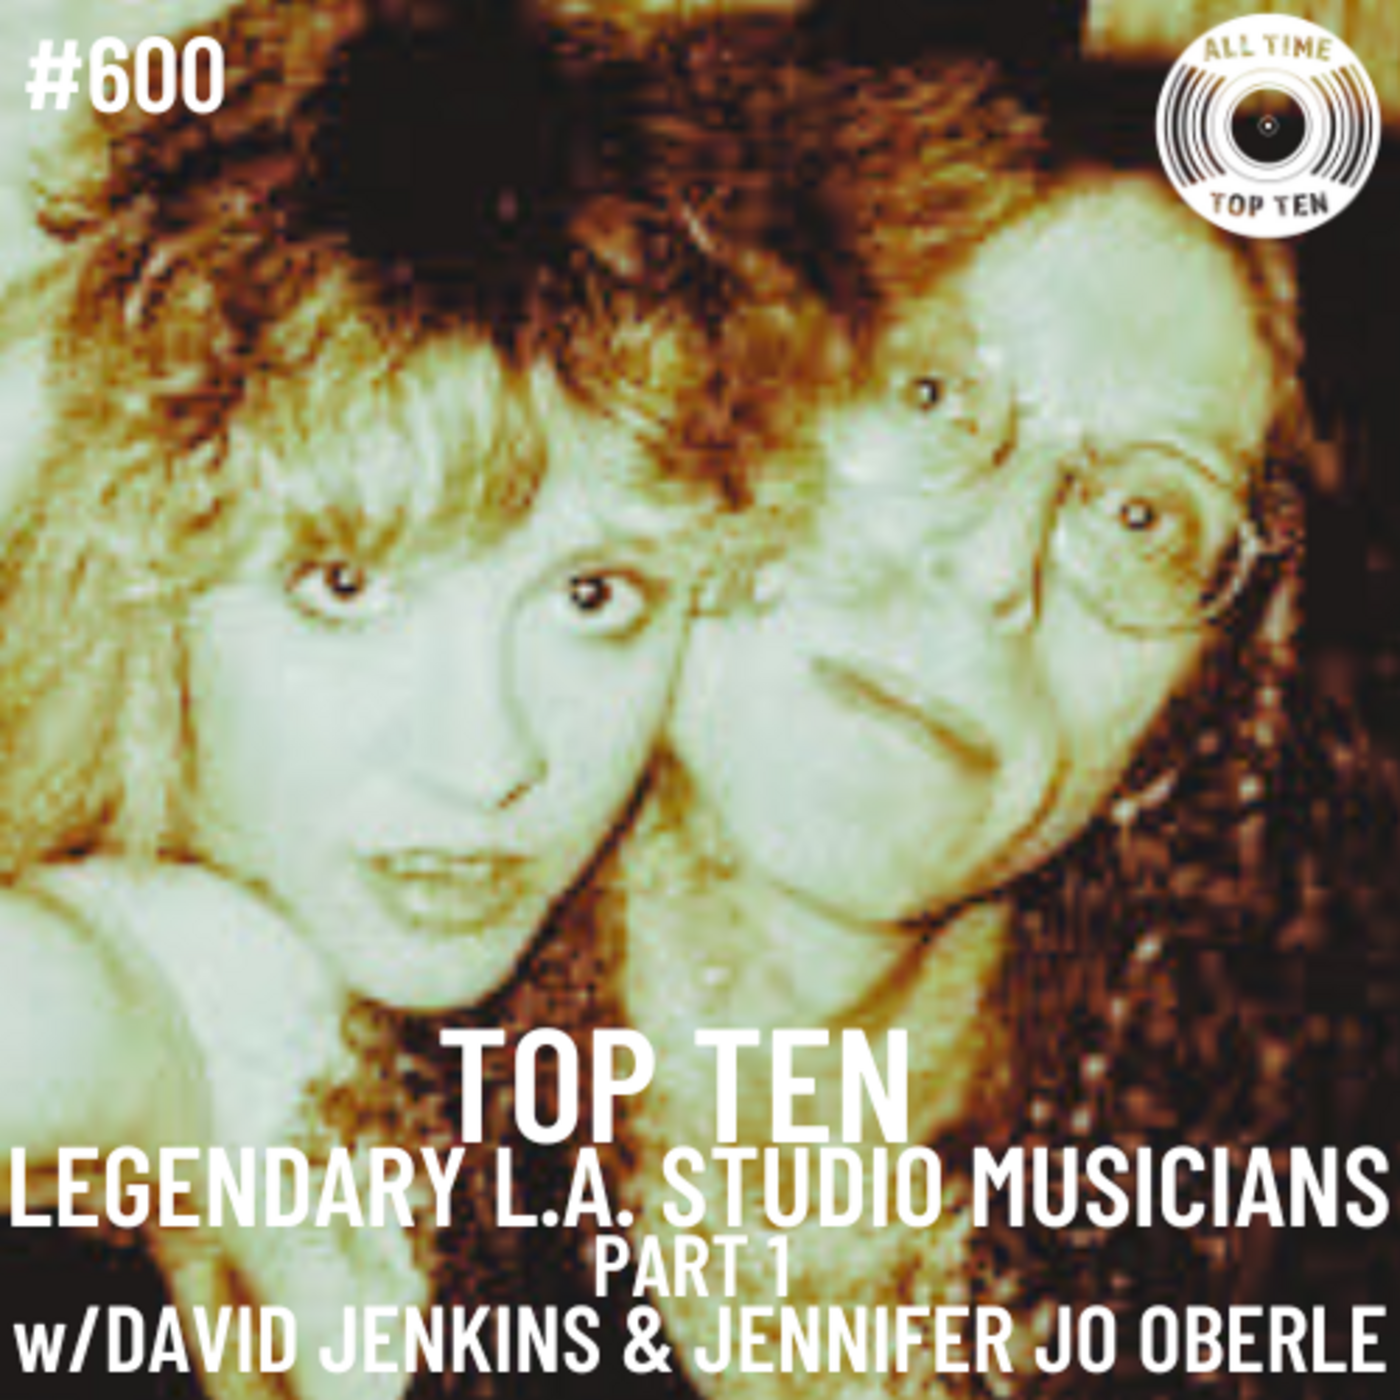 Episode 600 - Top Ten Legendary L.A. Studio Musicians Part 1 w/David Jenkins & Jennifer Jo Oberle